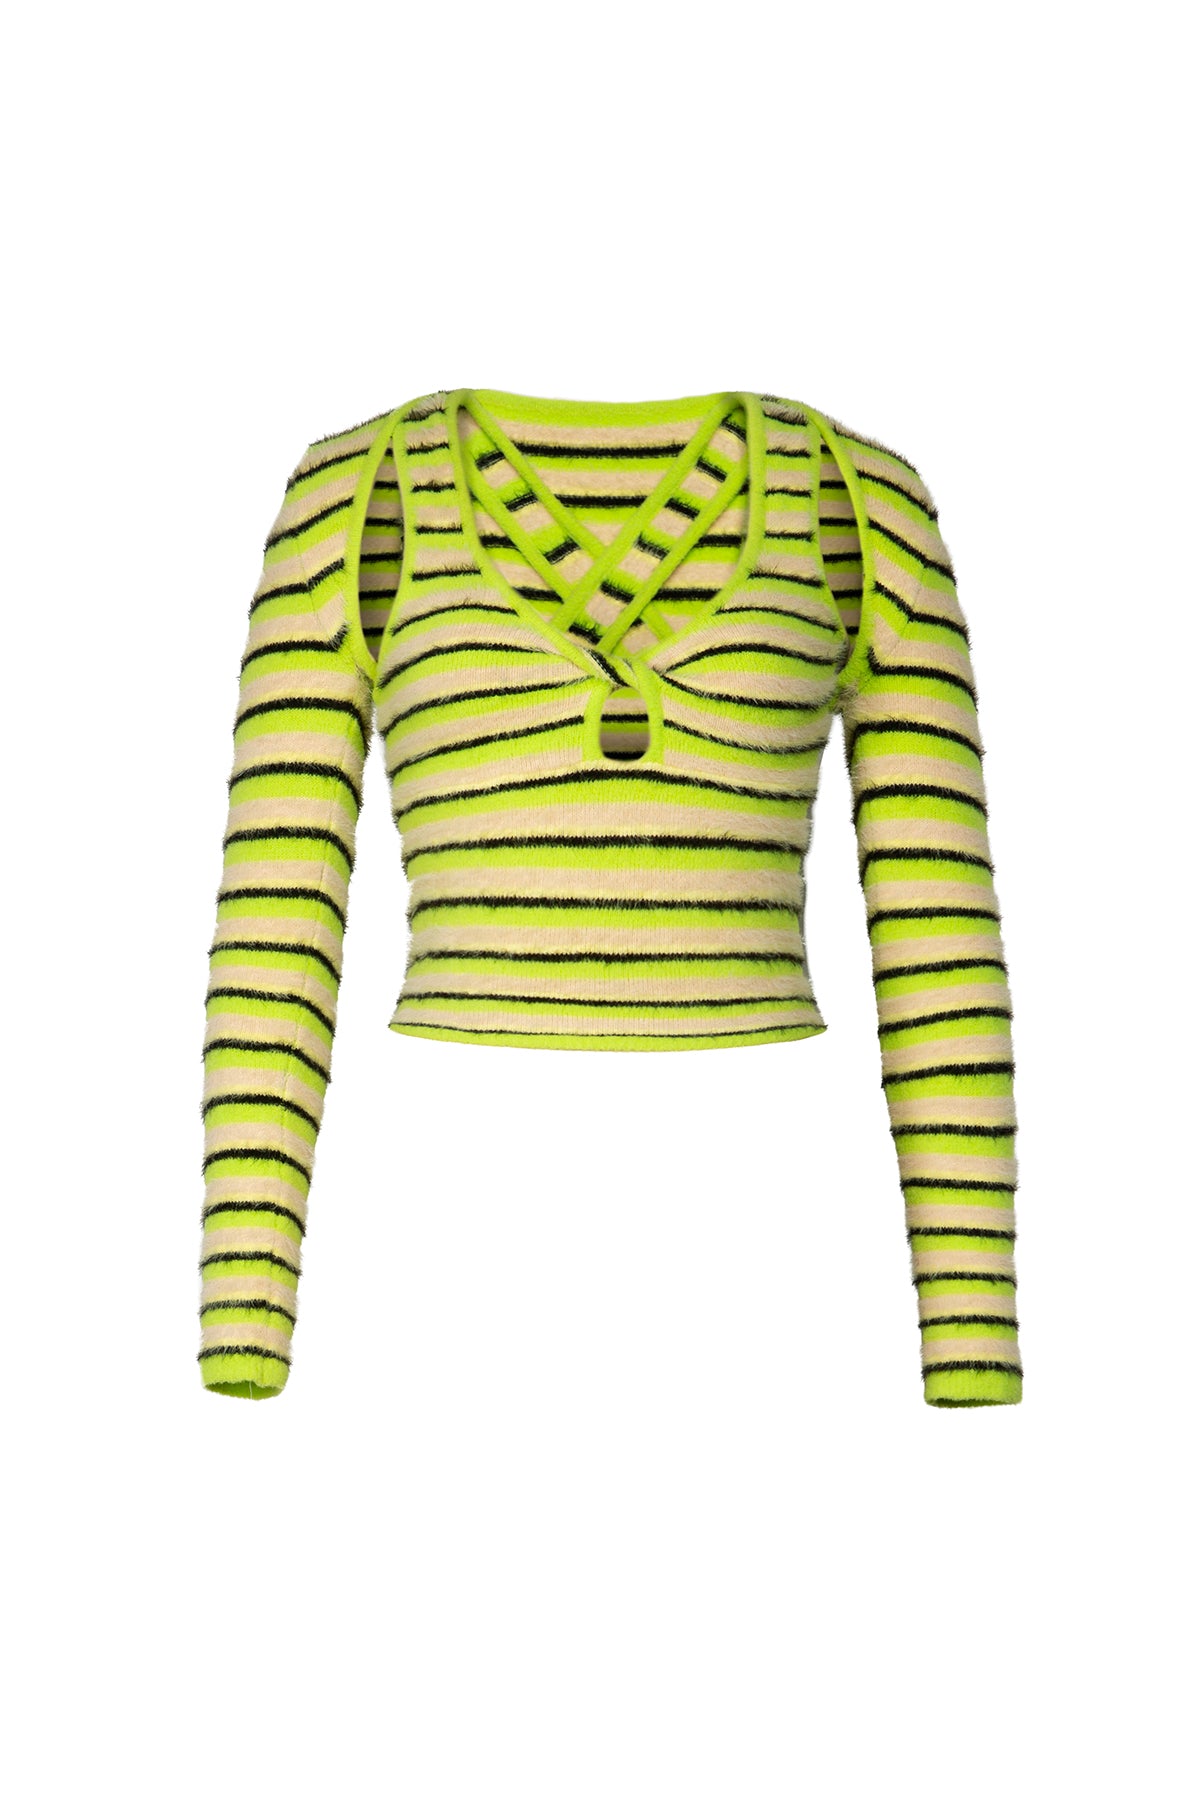 Estie Knit Set - Lime Stripe